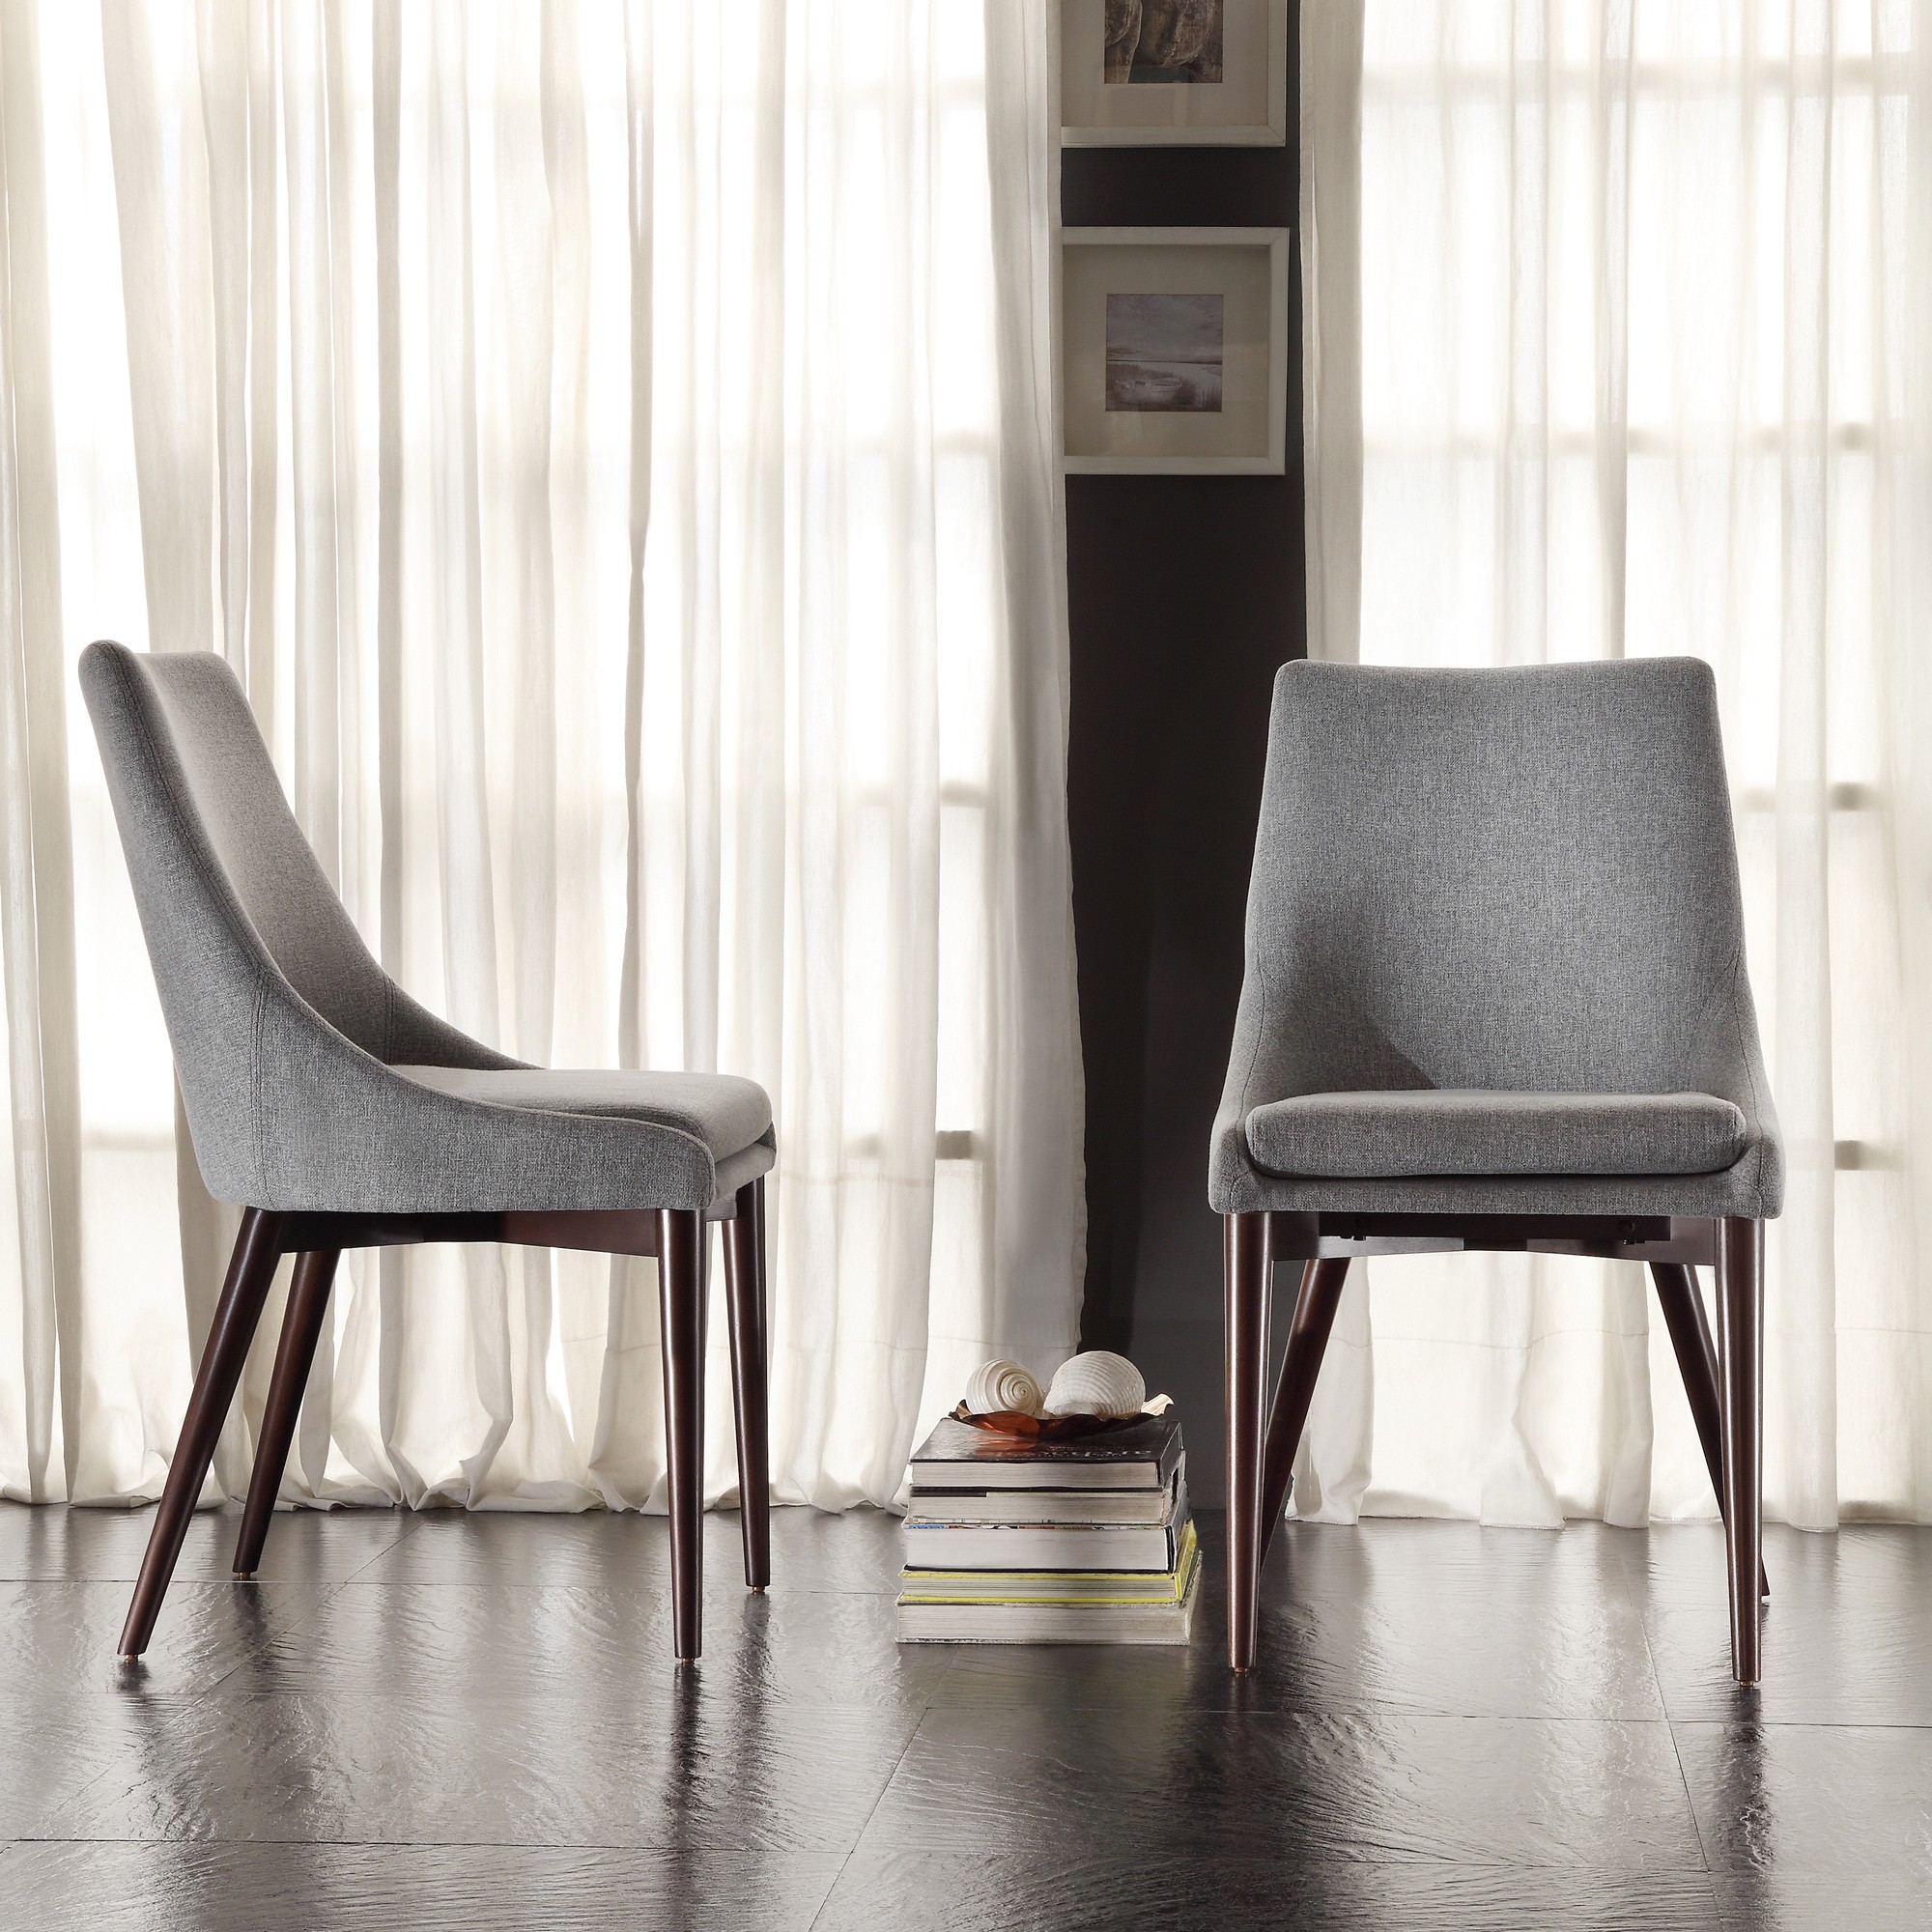 12 Beautiful Upholstered Chairs for your Sri Lankan Home | Sri Lanka